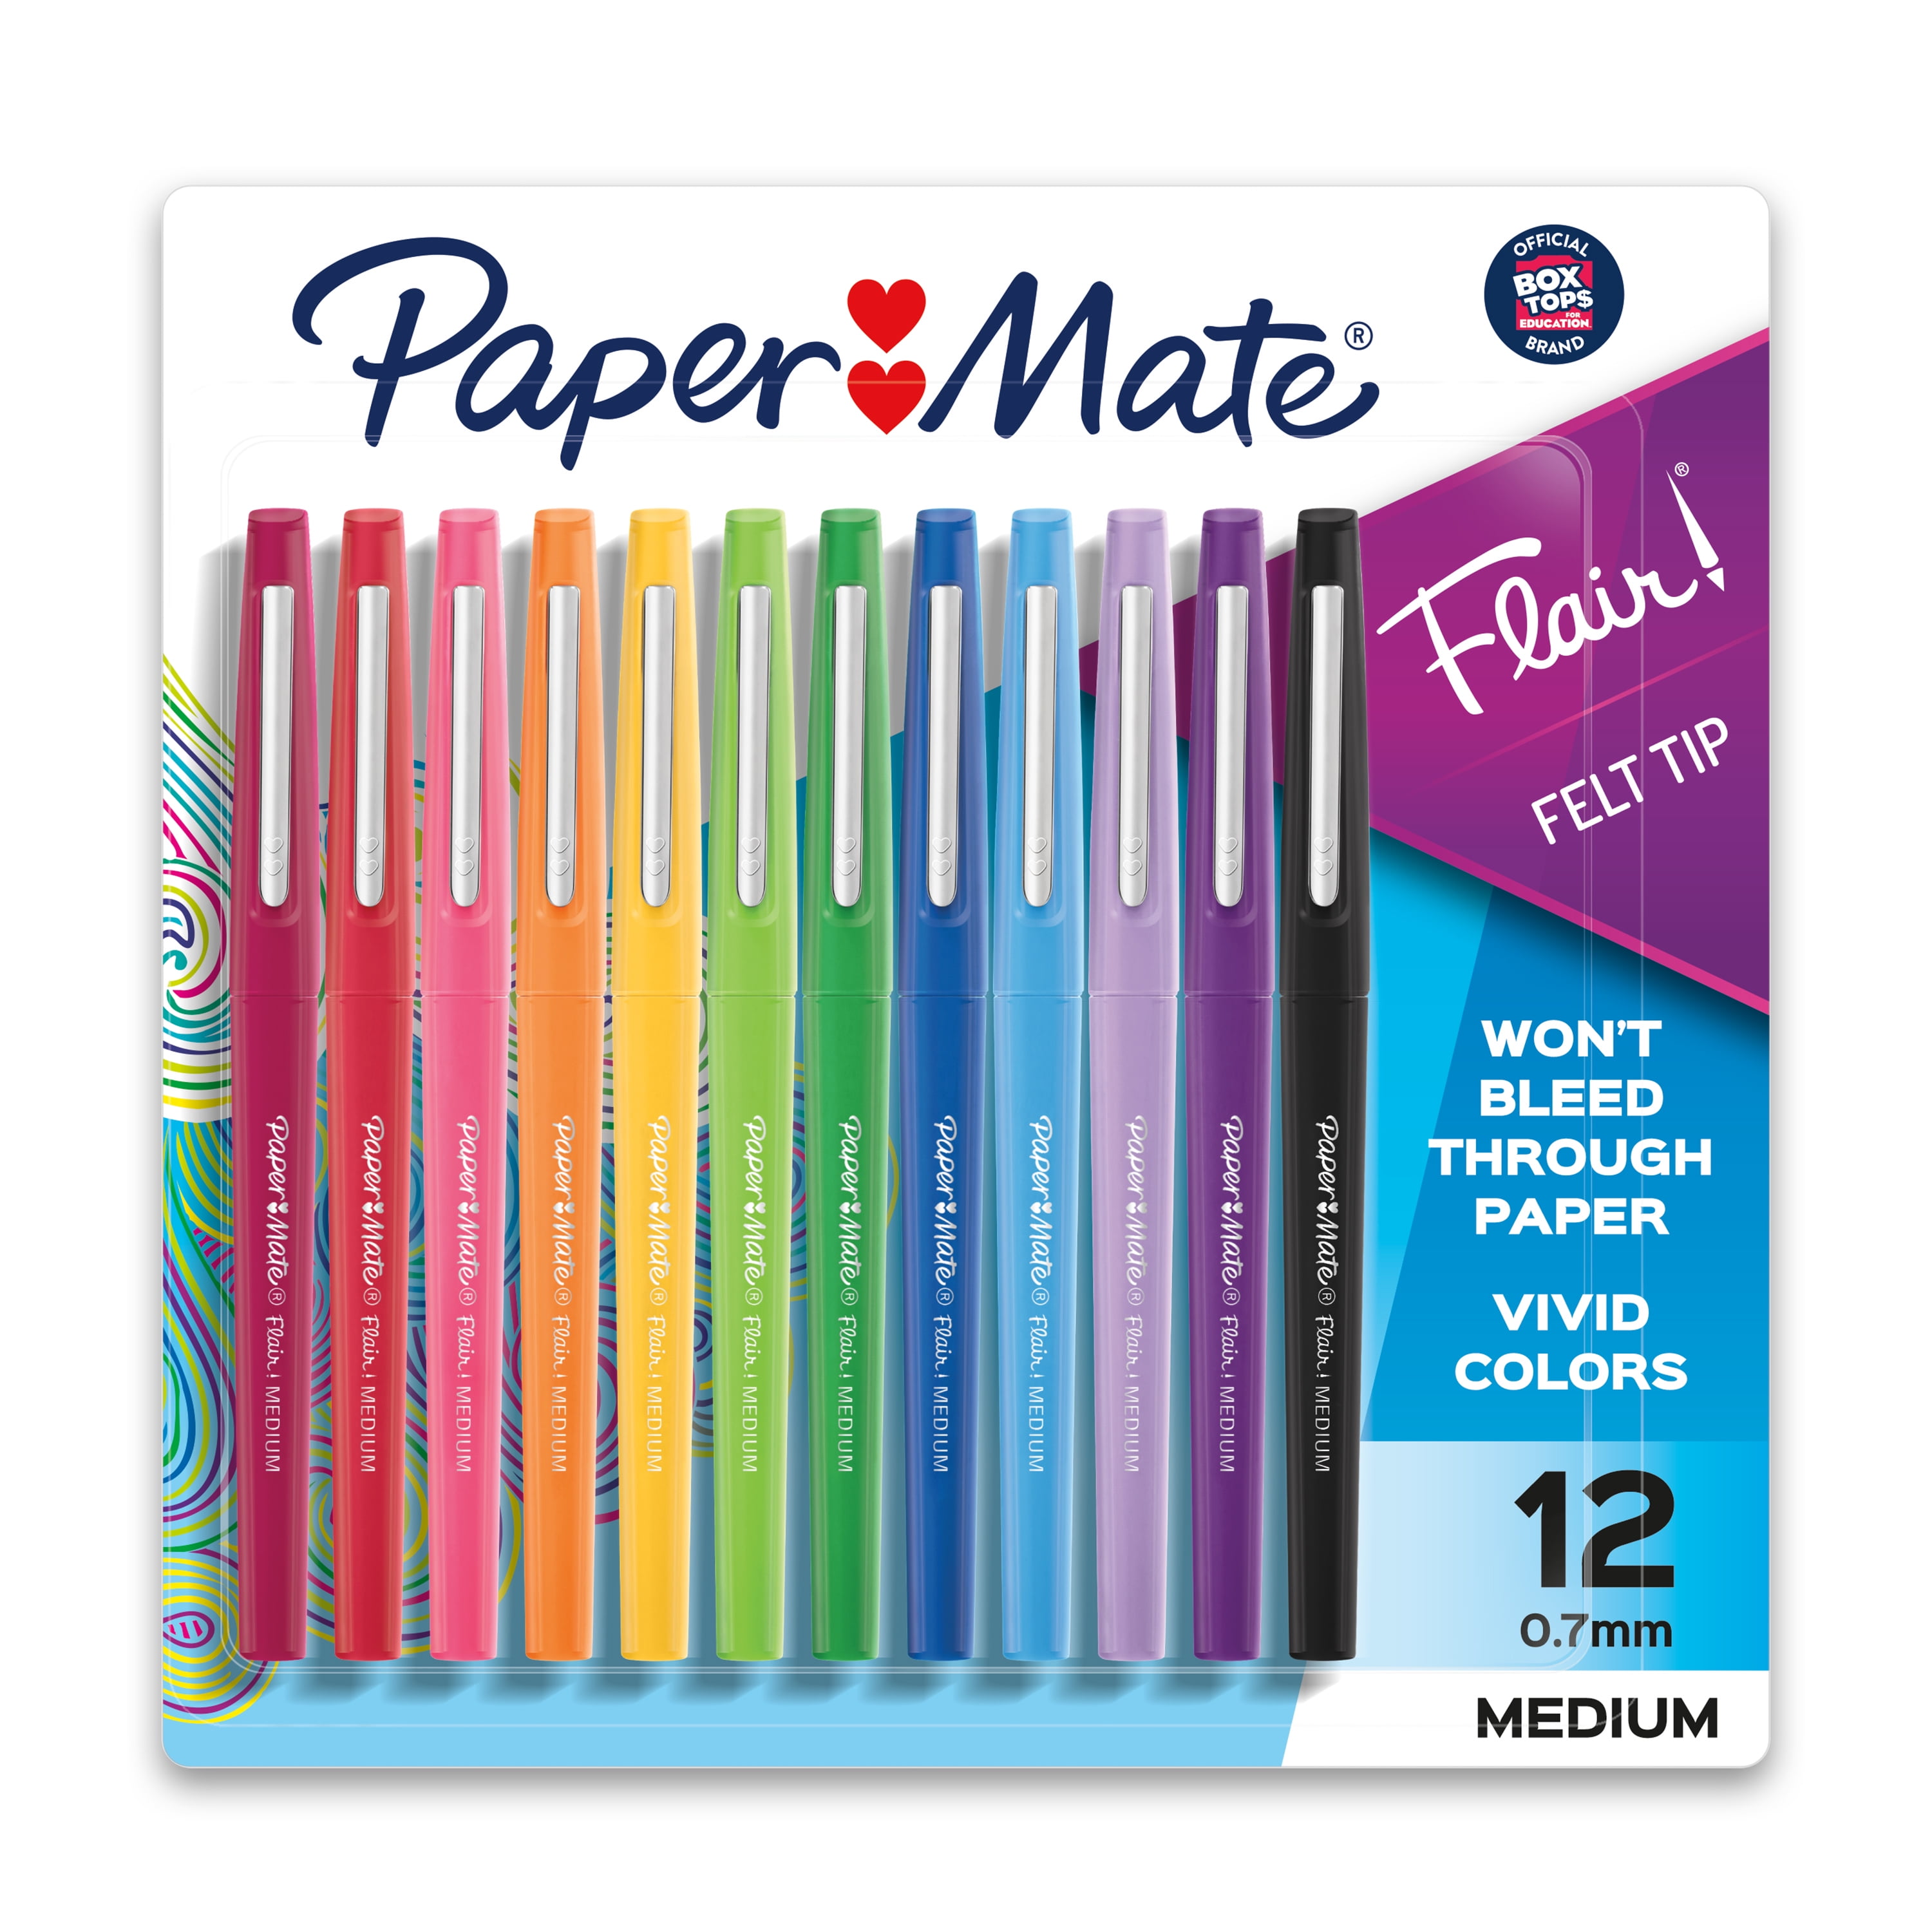 promising Interconnect leather Paper Mate Flair Felt Tip Pen Set, 0.7mm, 12 Count - Walmart.com